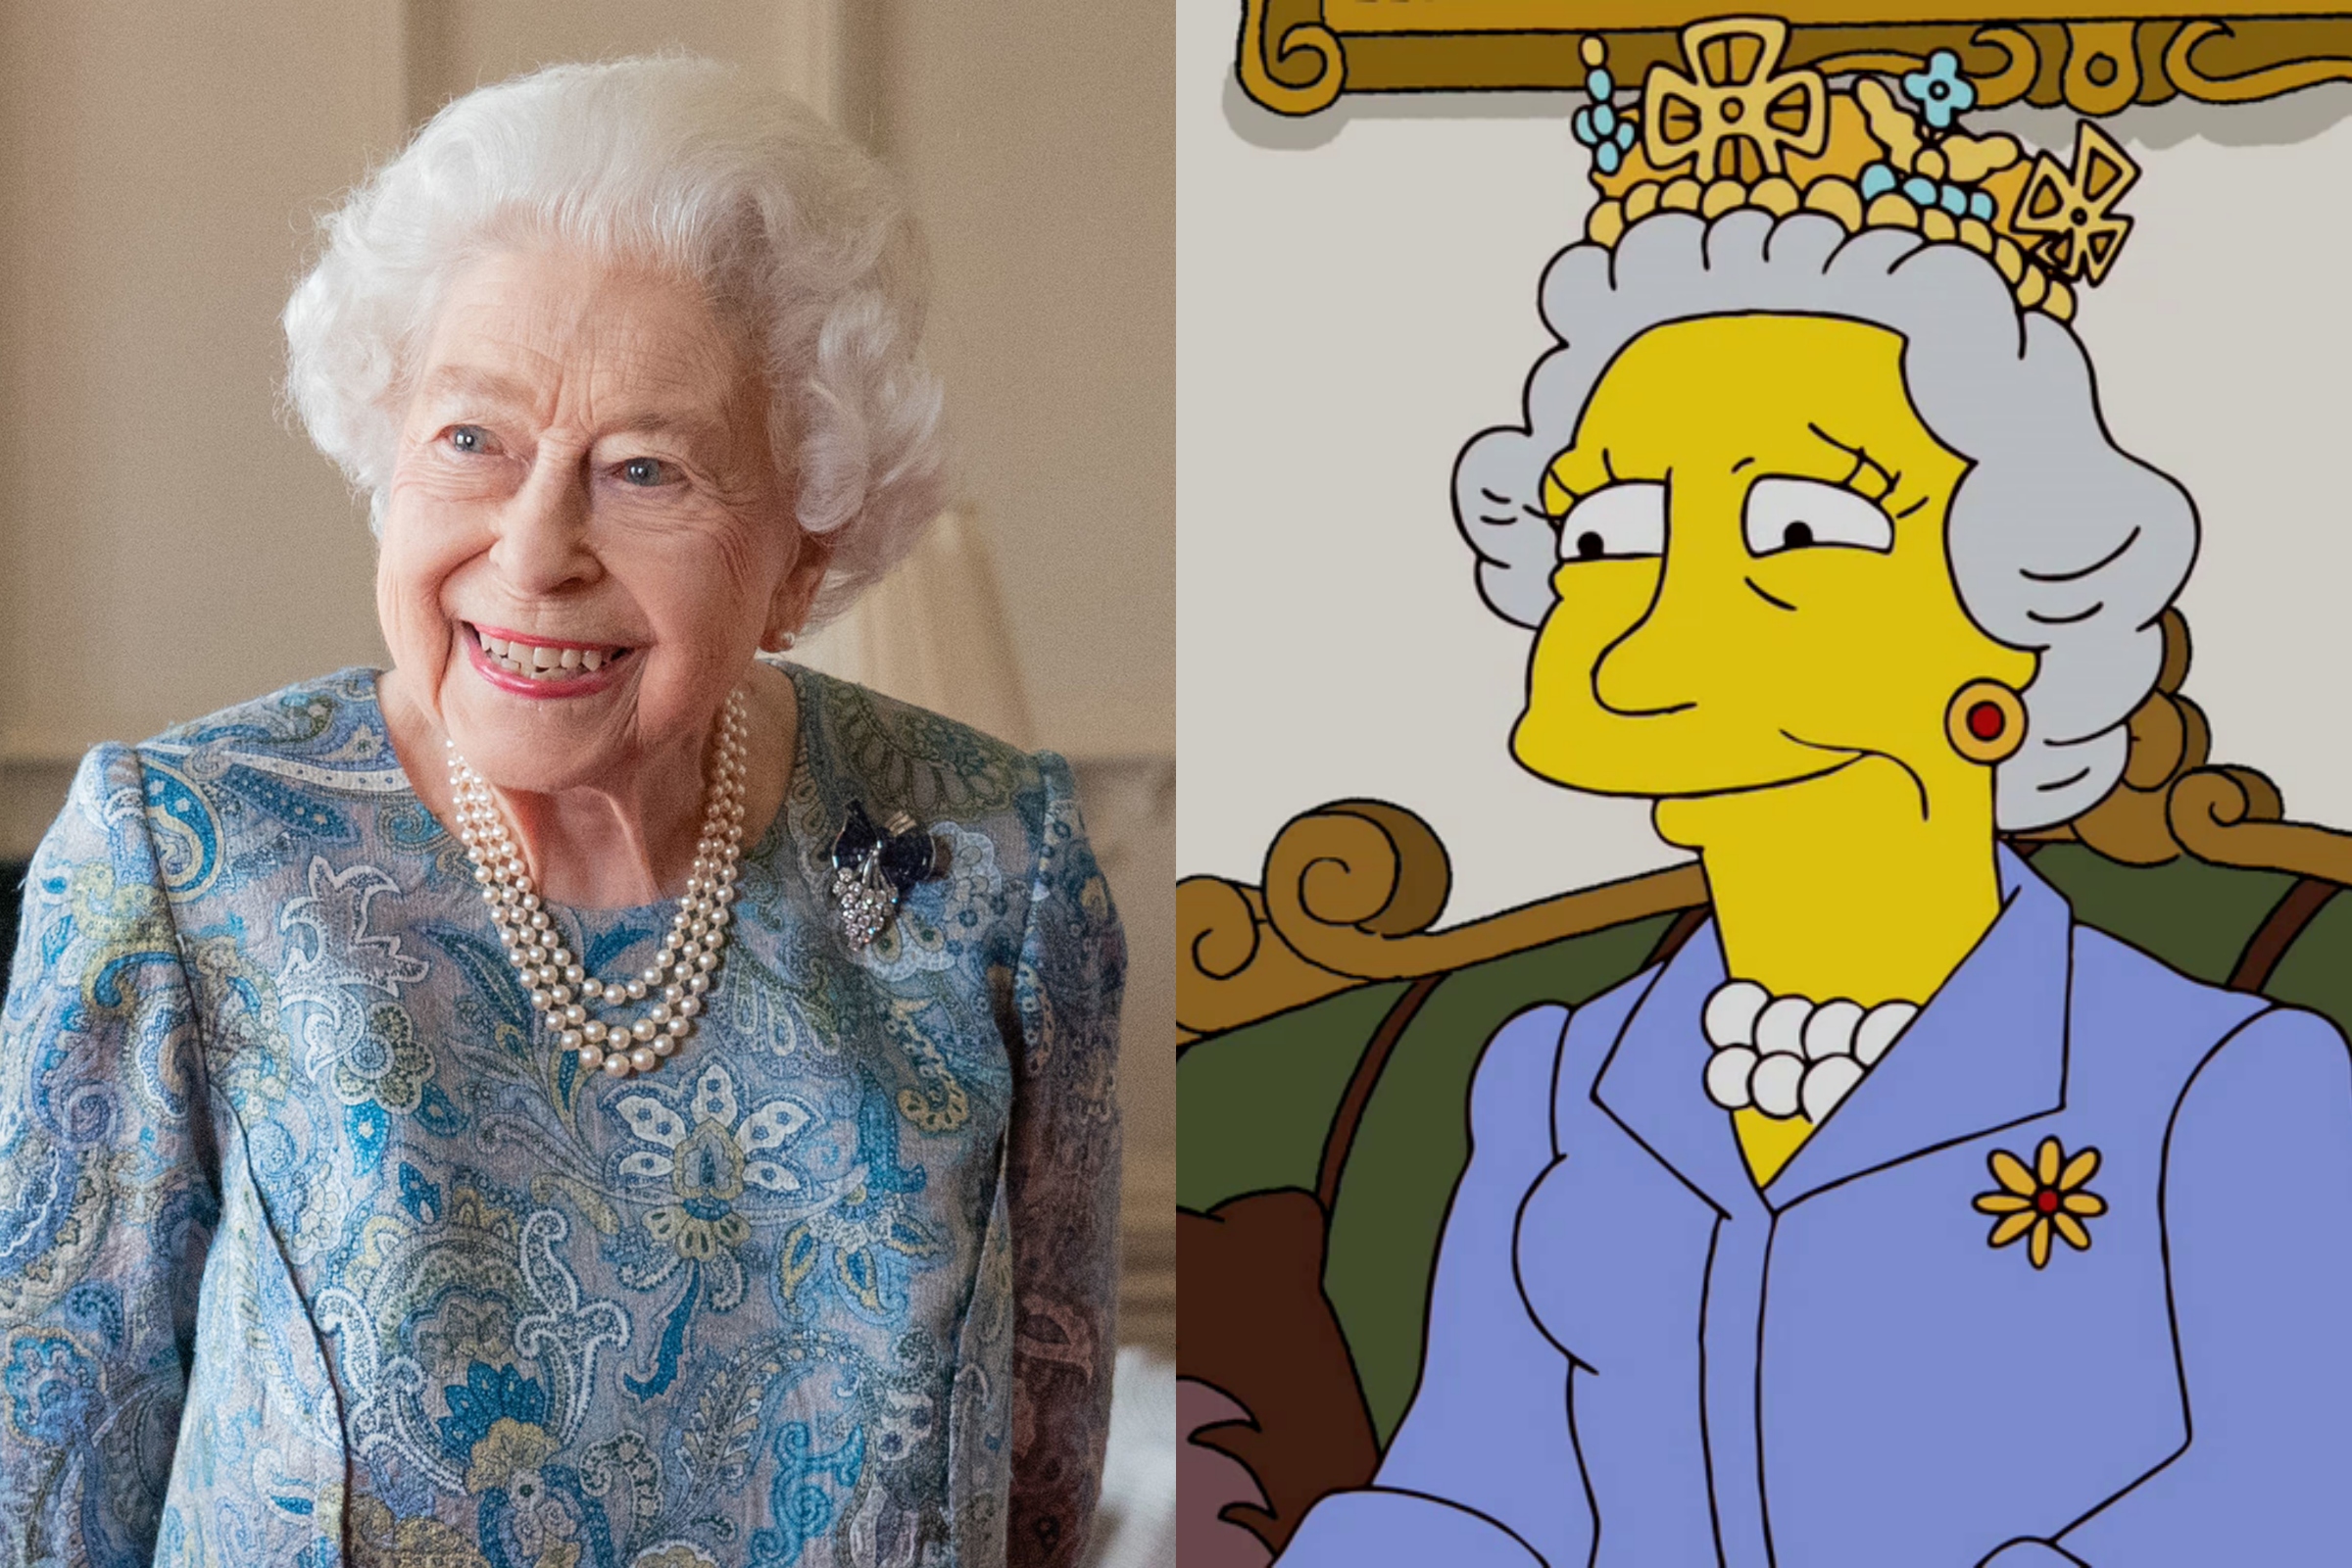 No, 'The Simpsons' Did Not Predict the Death of Queen Elizabeth II